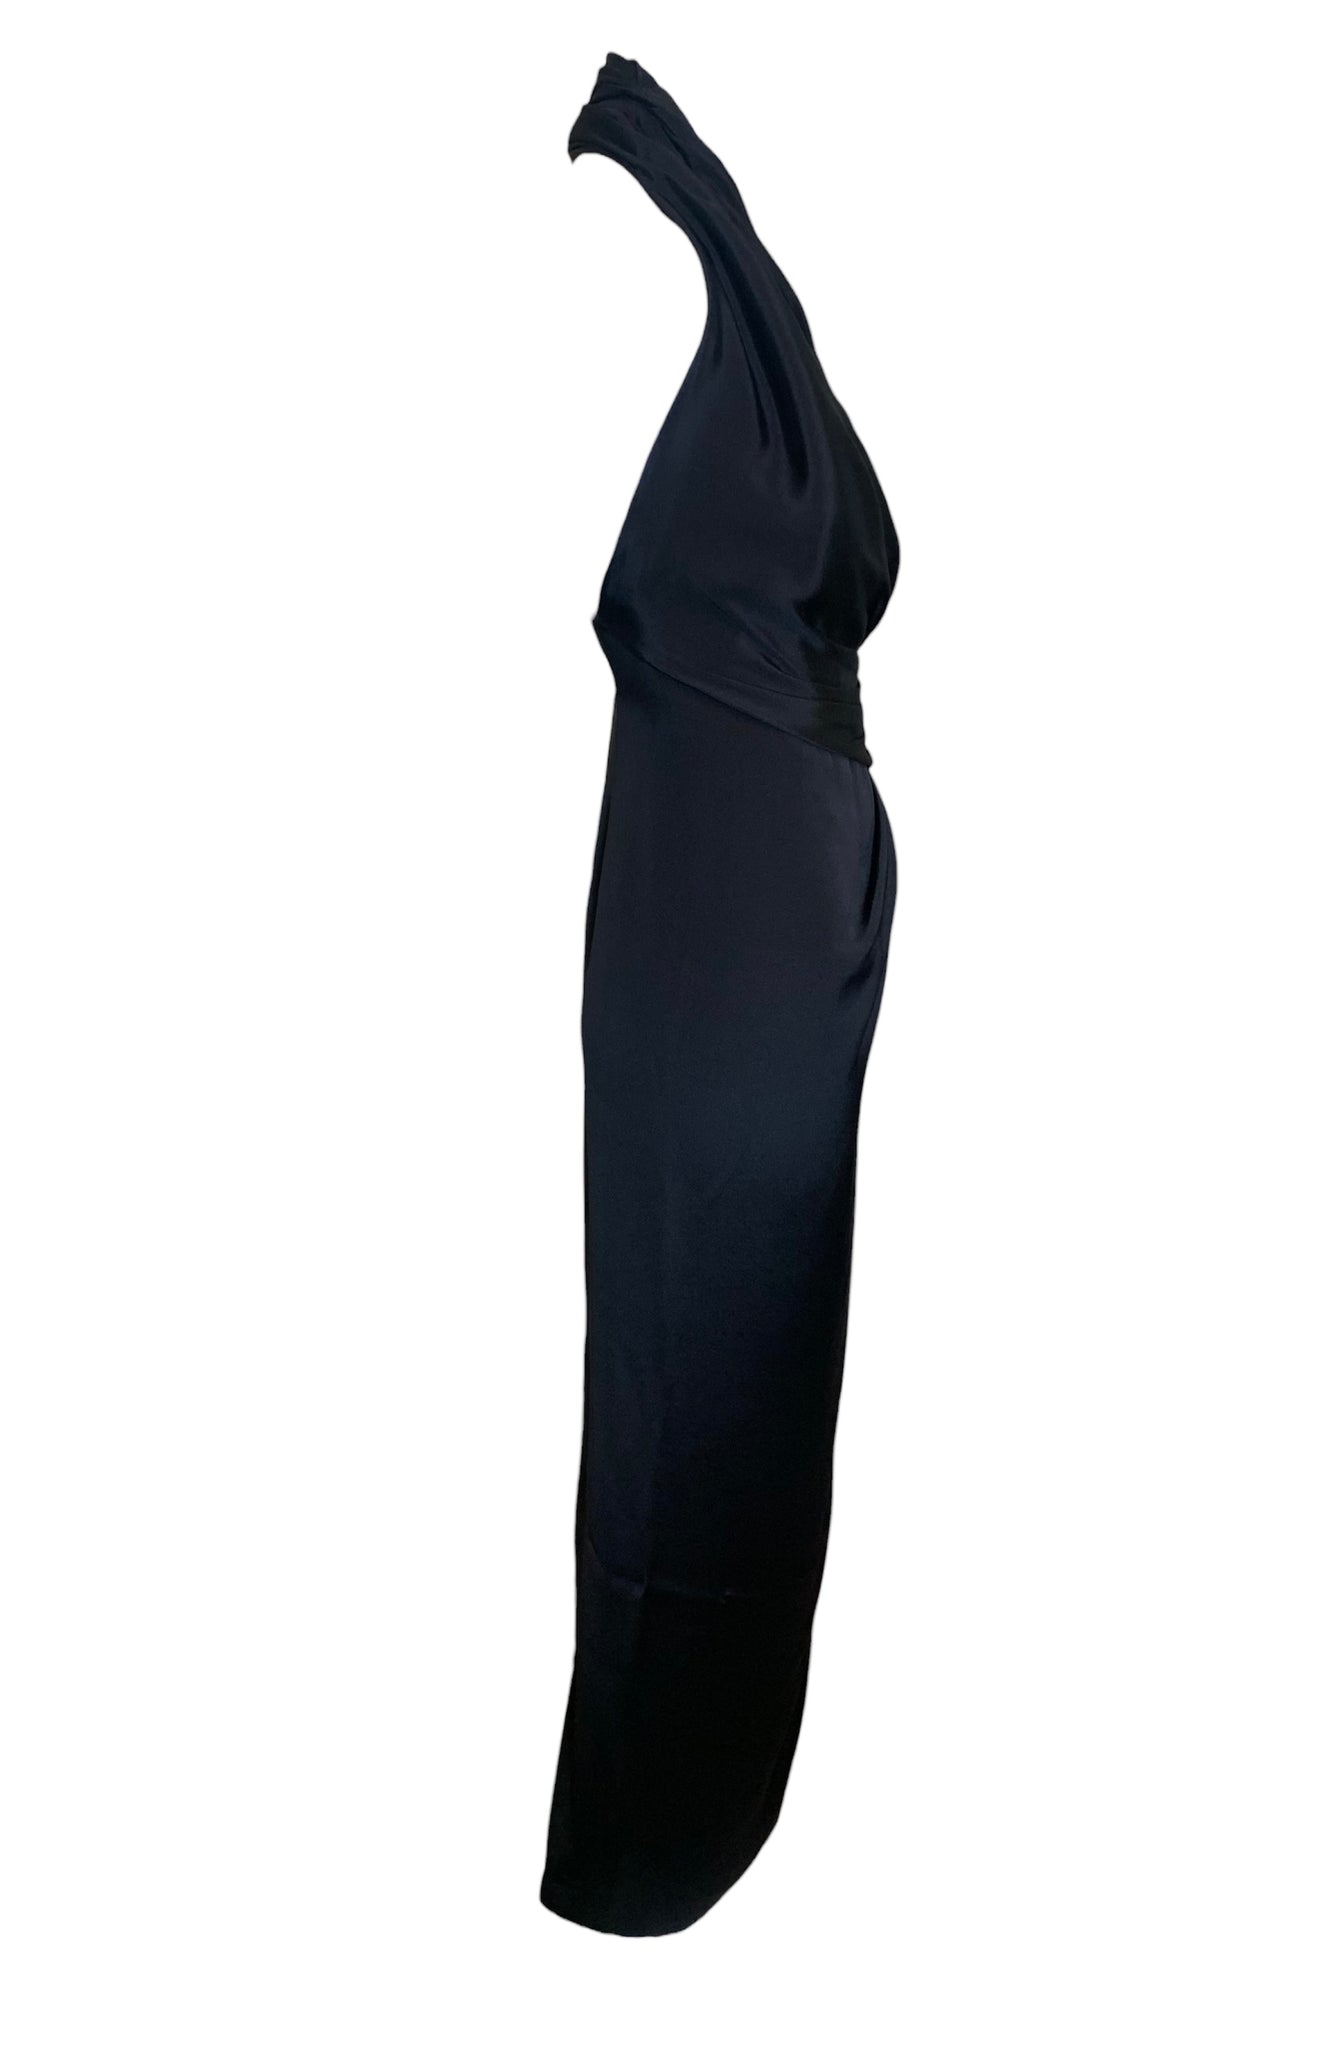 Atelier Versace 90s Lifetime Gianni Versace Black Silk Goddess Halter Gown SIDE 2 of 4